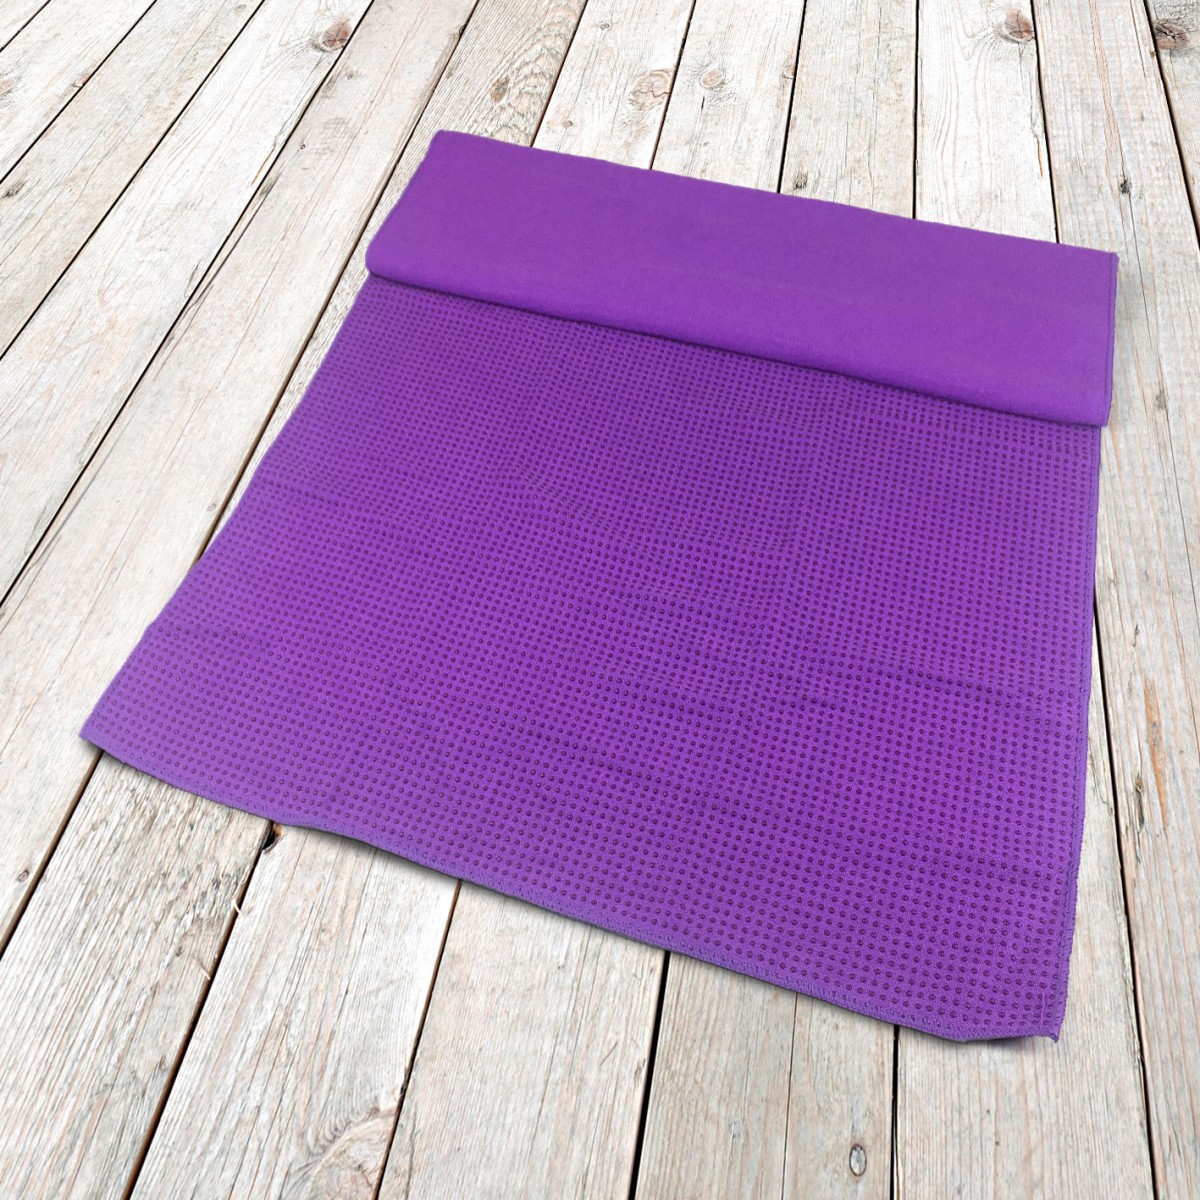 Esterilla de Yoga antideslizante, manta de toalla antideslizante plegable  Extra larga para ejercicio físico, estera de